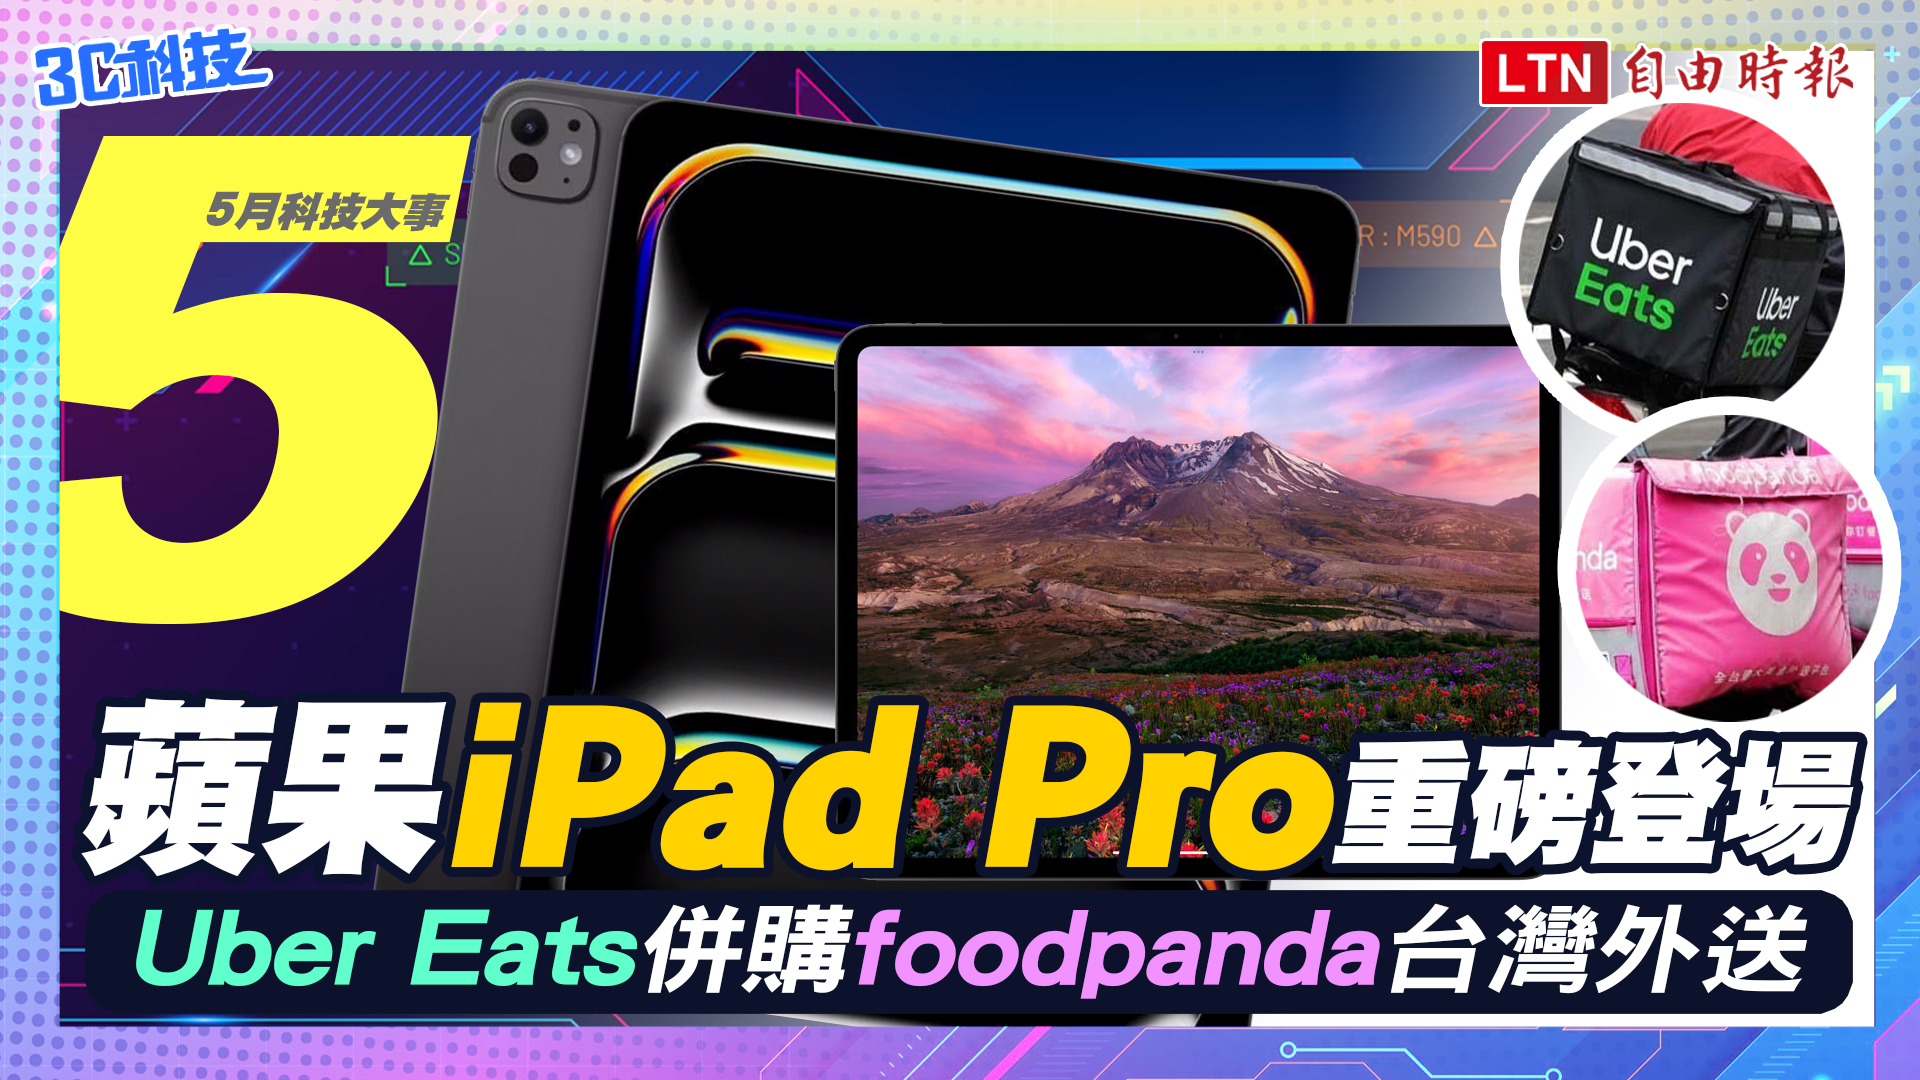 （影音）5月科技大事 蘋果iPad Pro重磅登場 Uber Eats併購foodpand